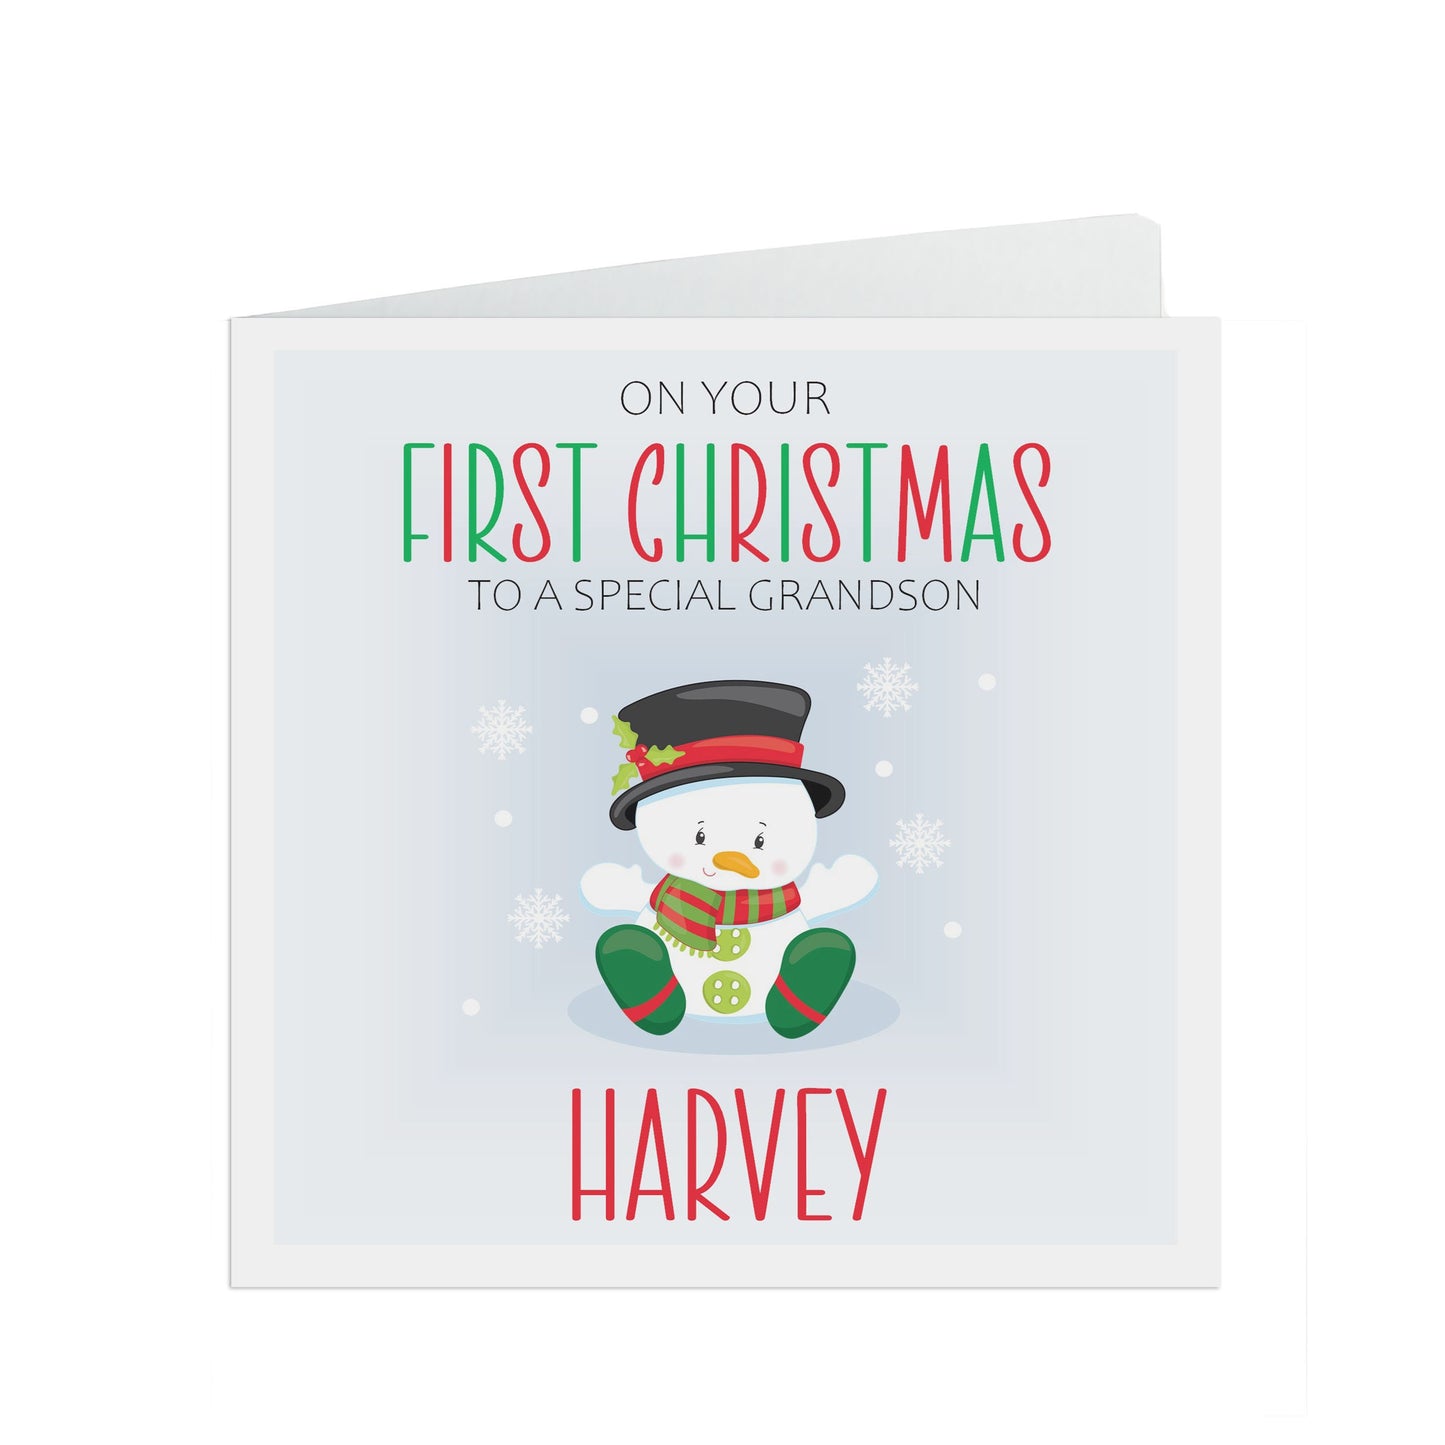 Grandson Personalised First Christmas Card - Prefect Keepsake